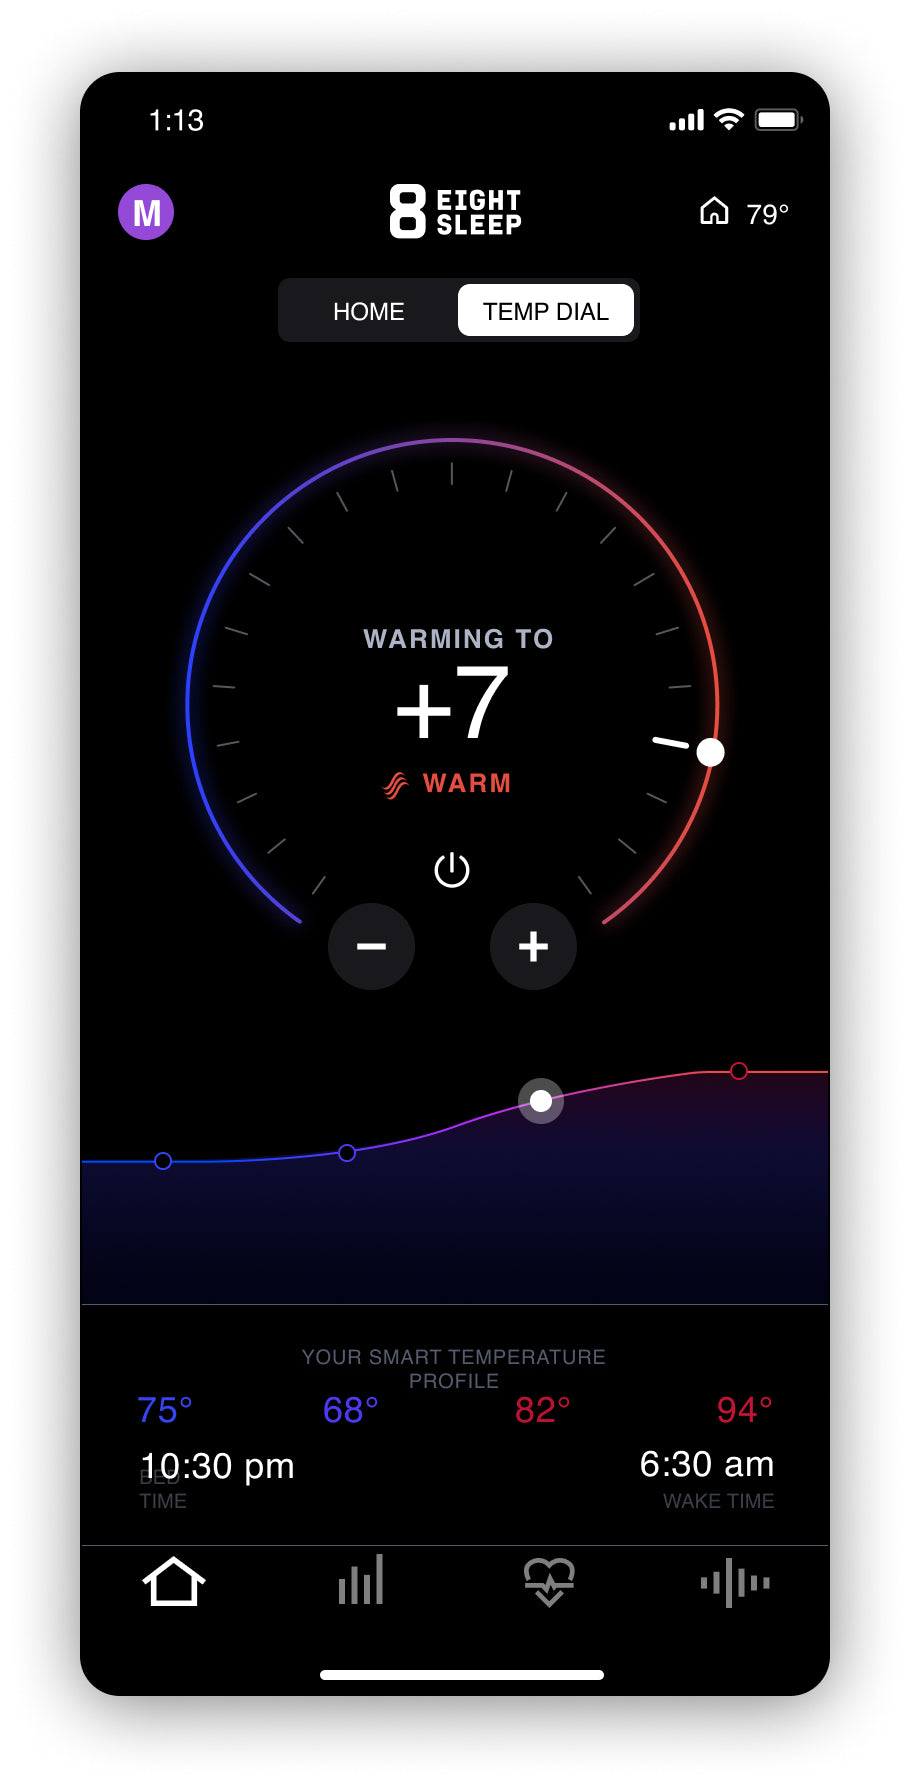 Mobile app screenshot showing Smart Temp autopilot feature